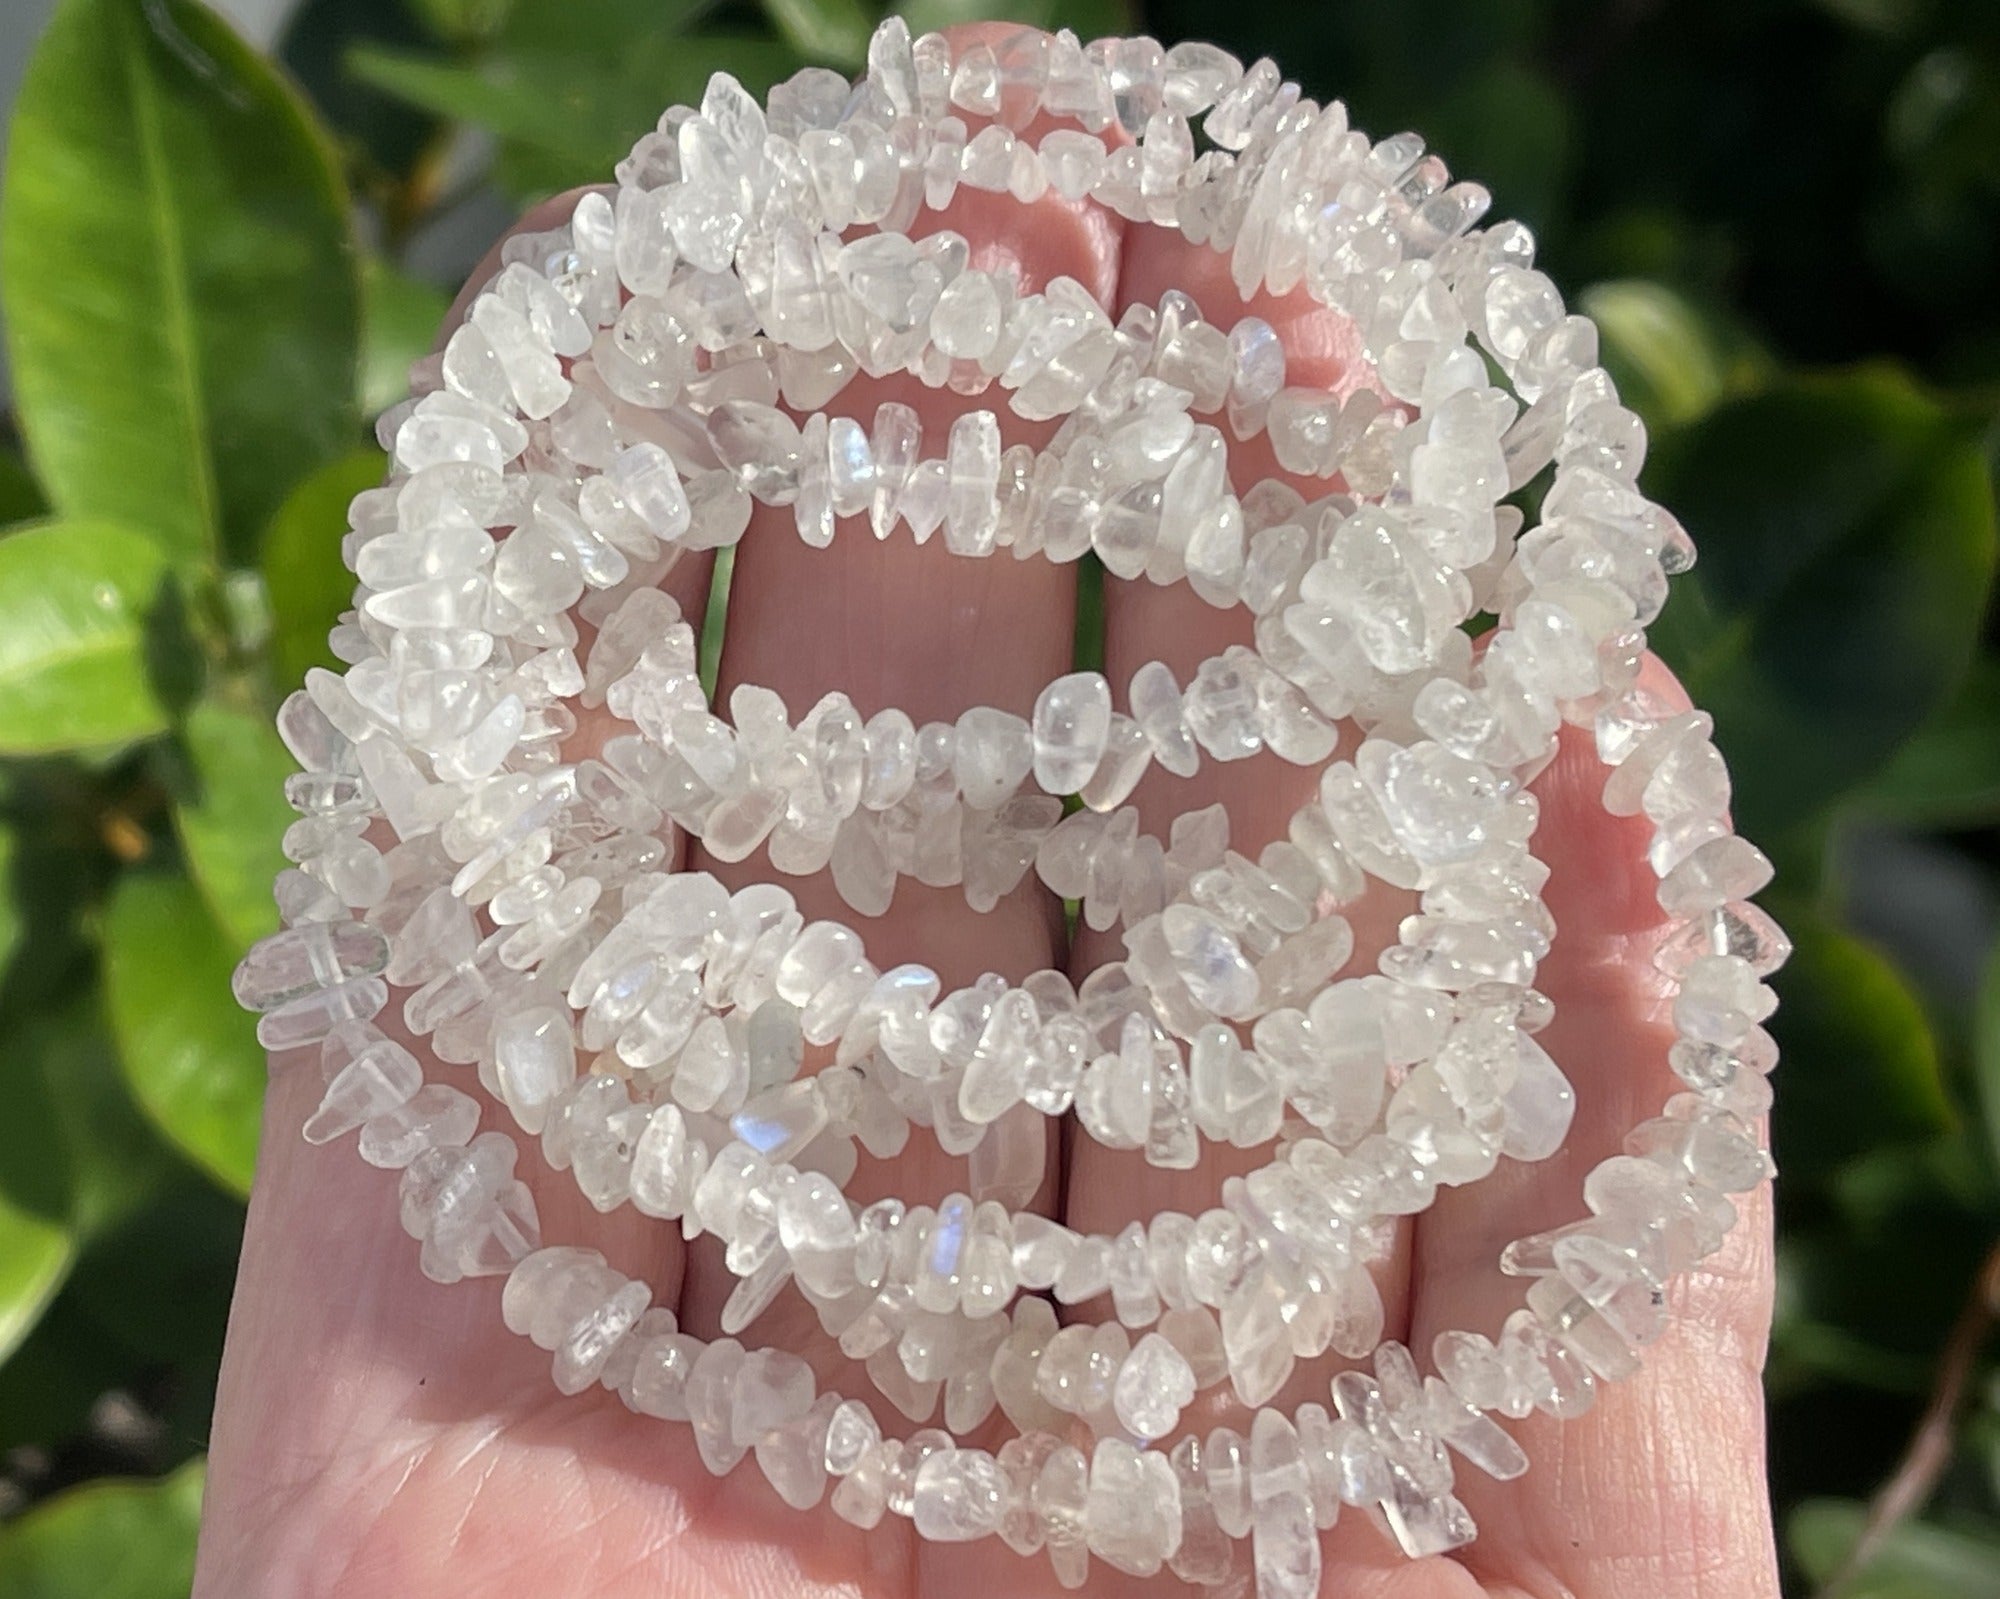 White Moonstone 4-6mm tiny chip beads natural gemstone chips 32" strand